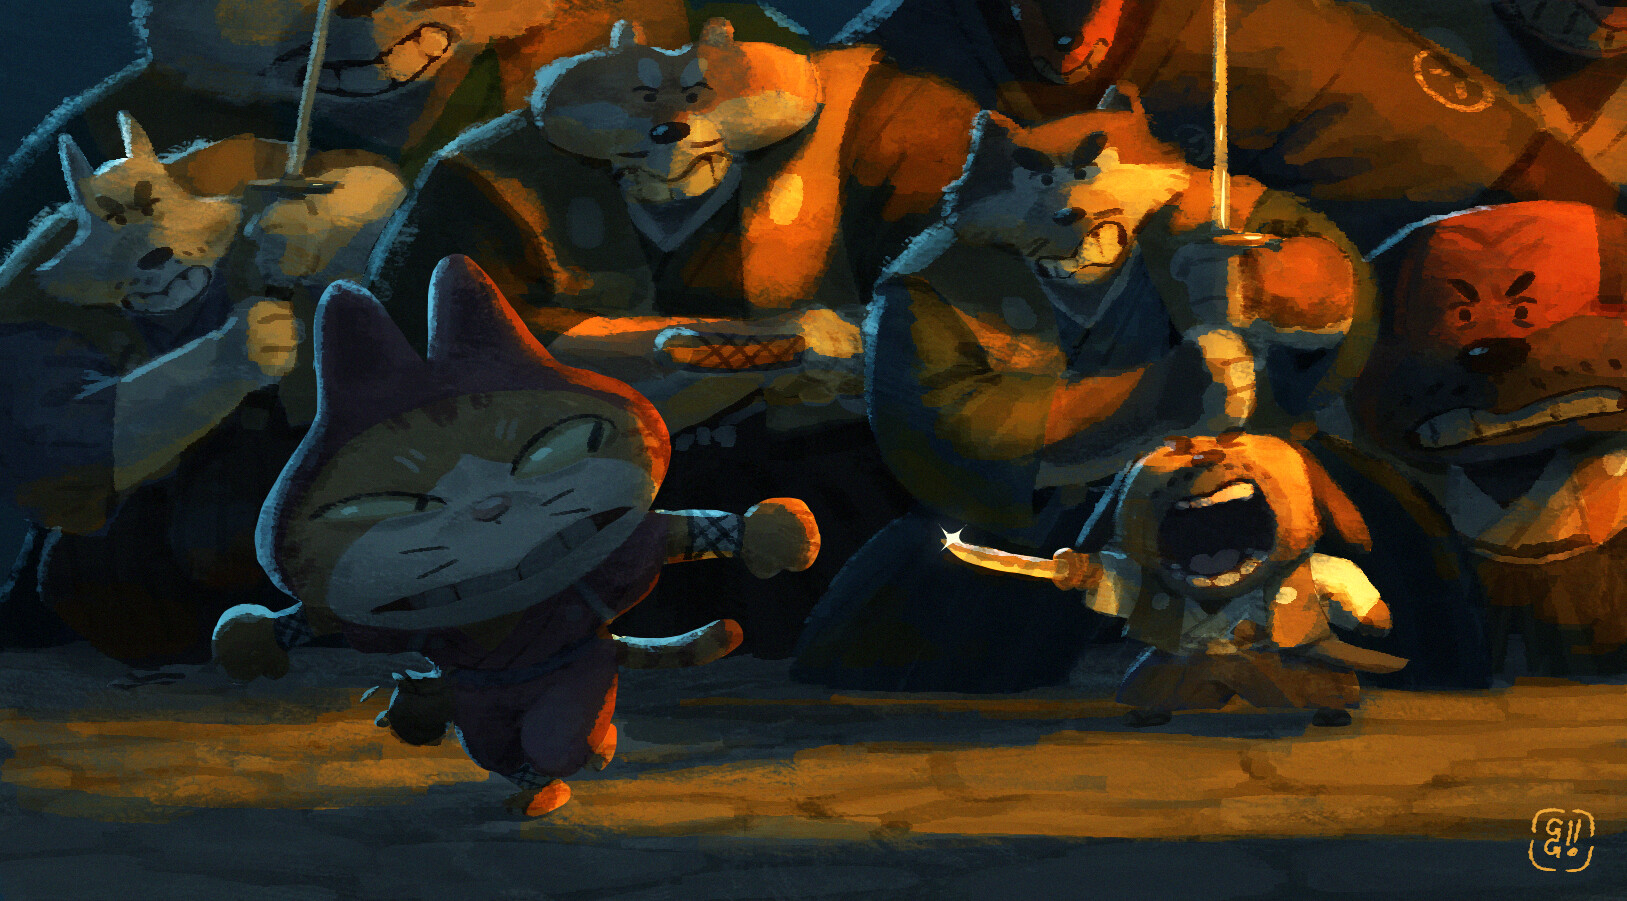 Painting of a small samurai dog yelling at a ninja cat